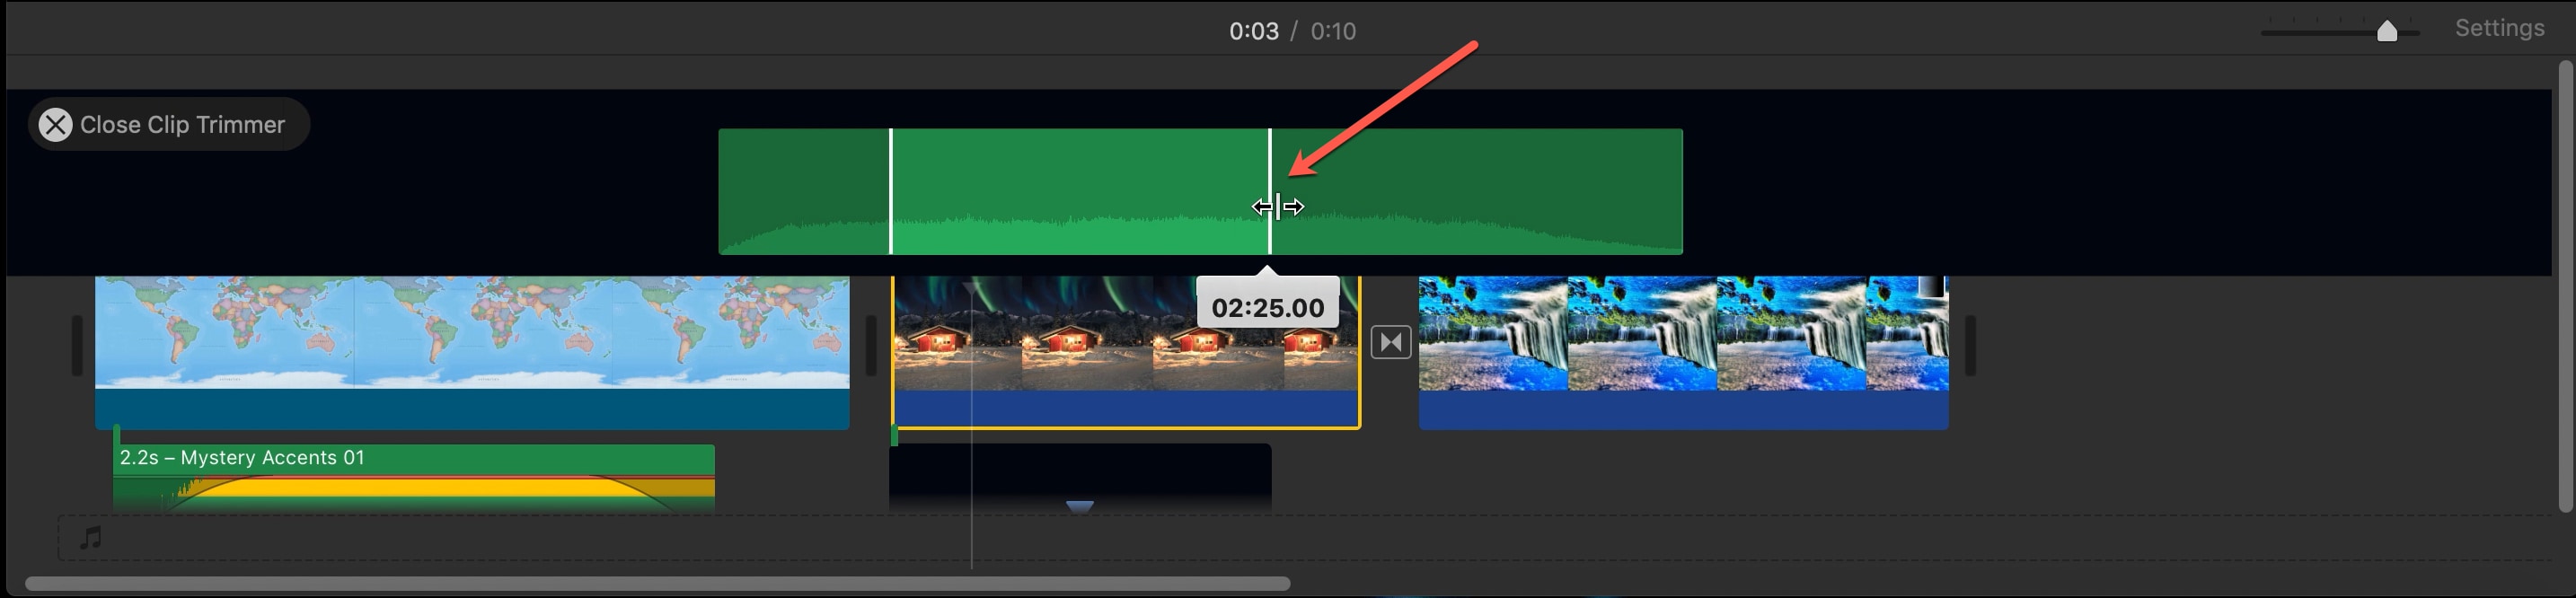 Mac Trimmer Clip iMovie Audio Clip